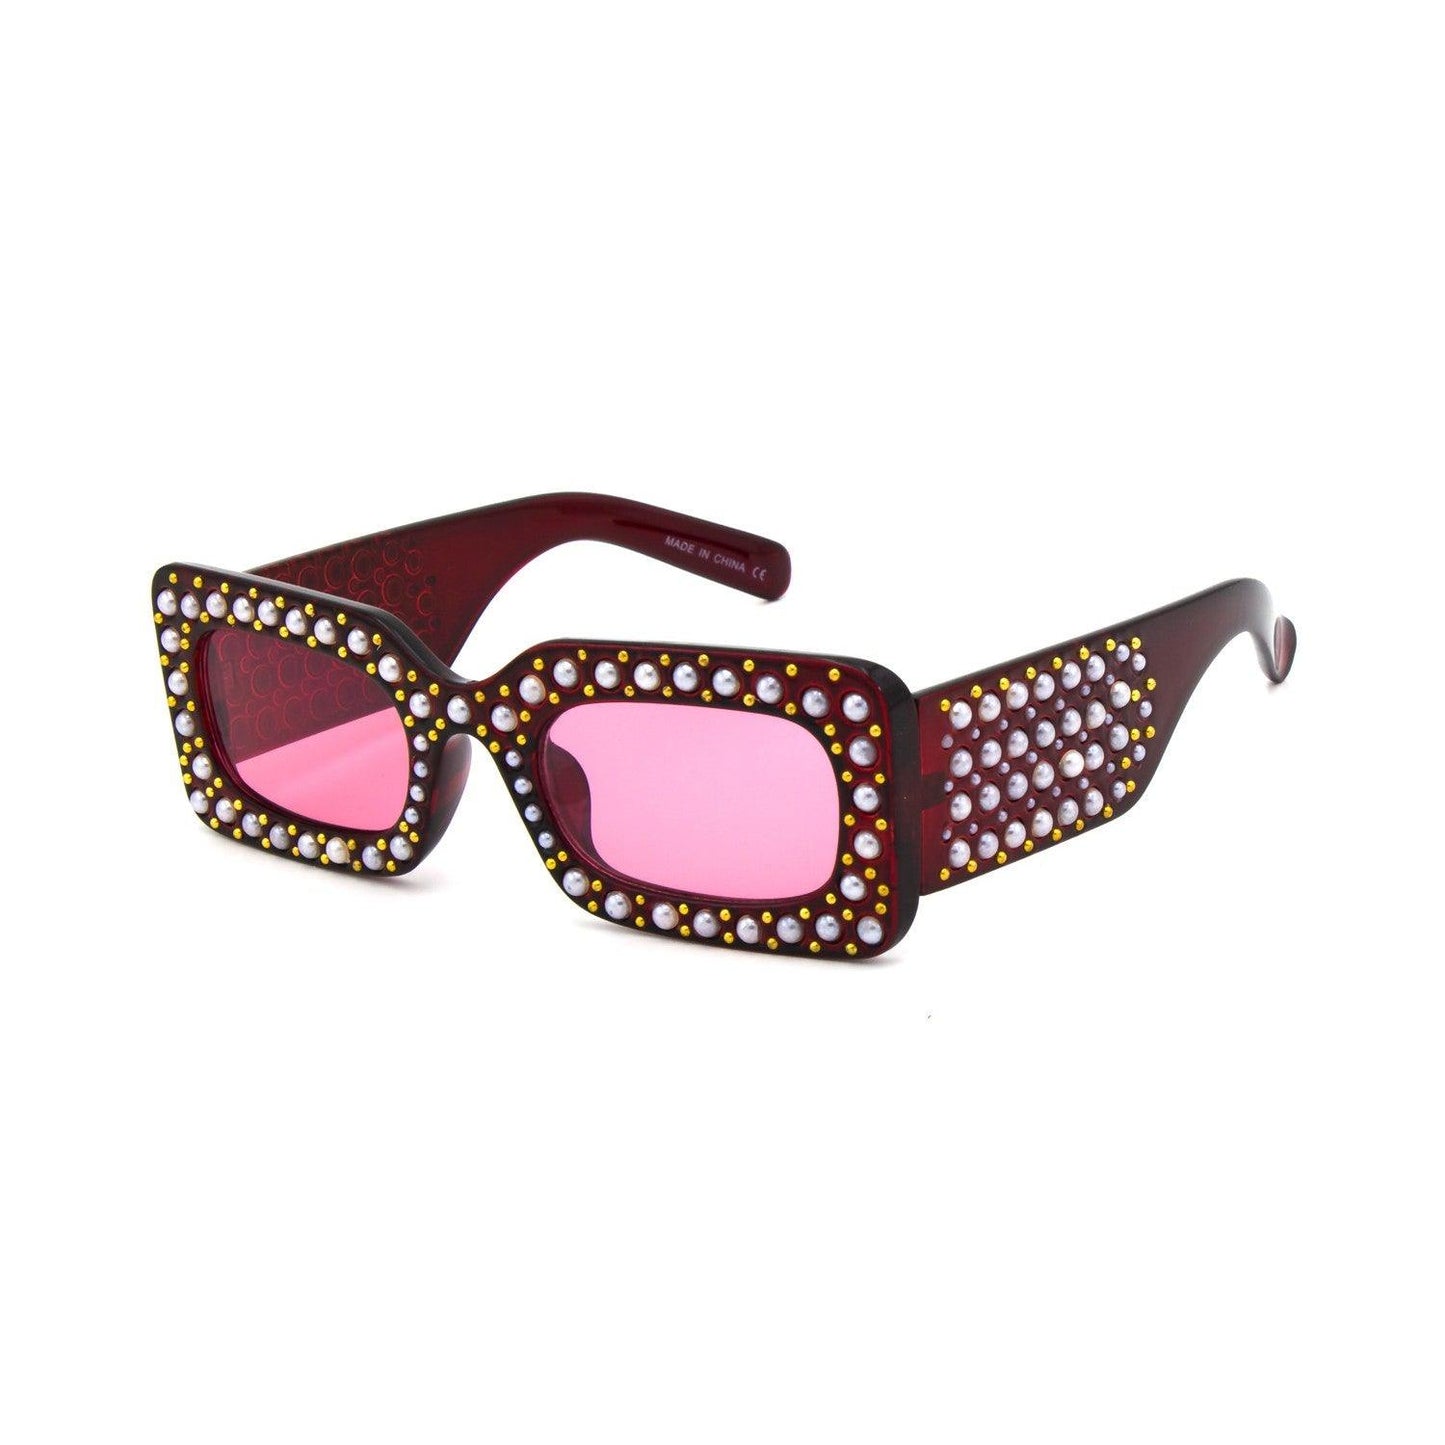 "Lifestyle" Pearl Design Sunglasses - Weekend Shade Sunglasses